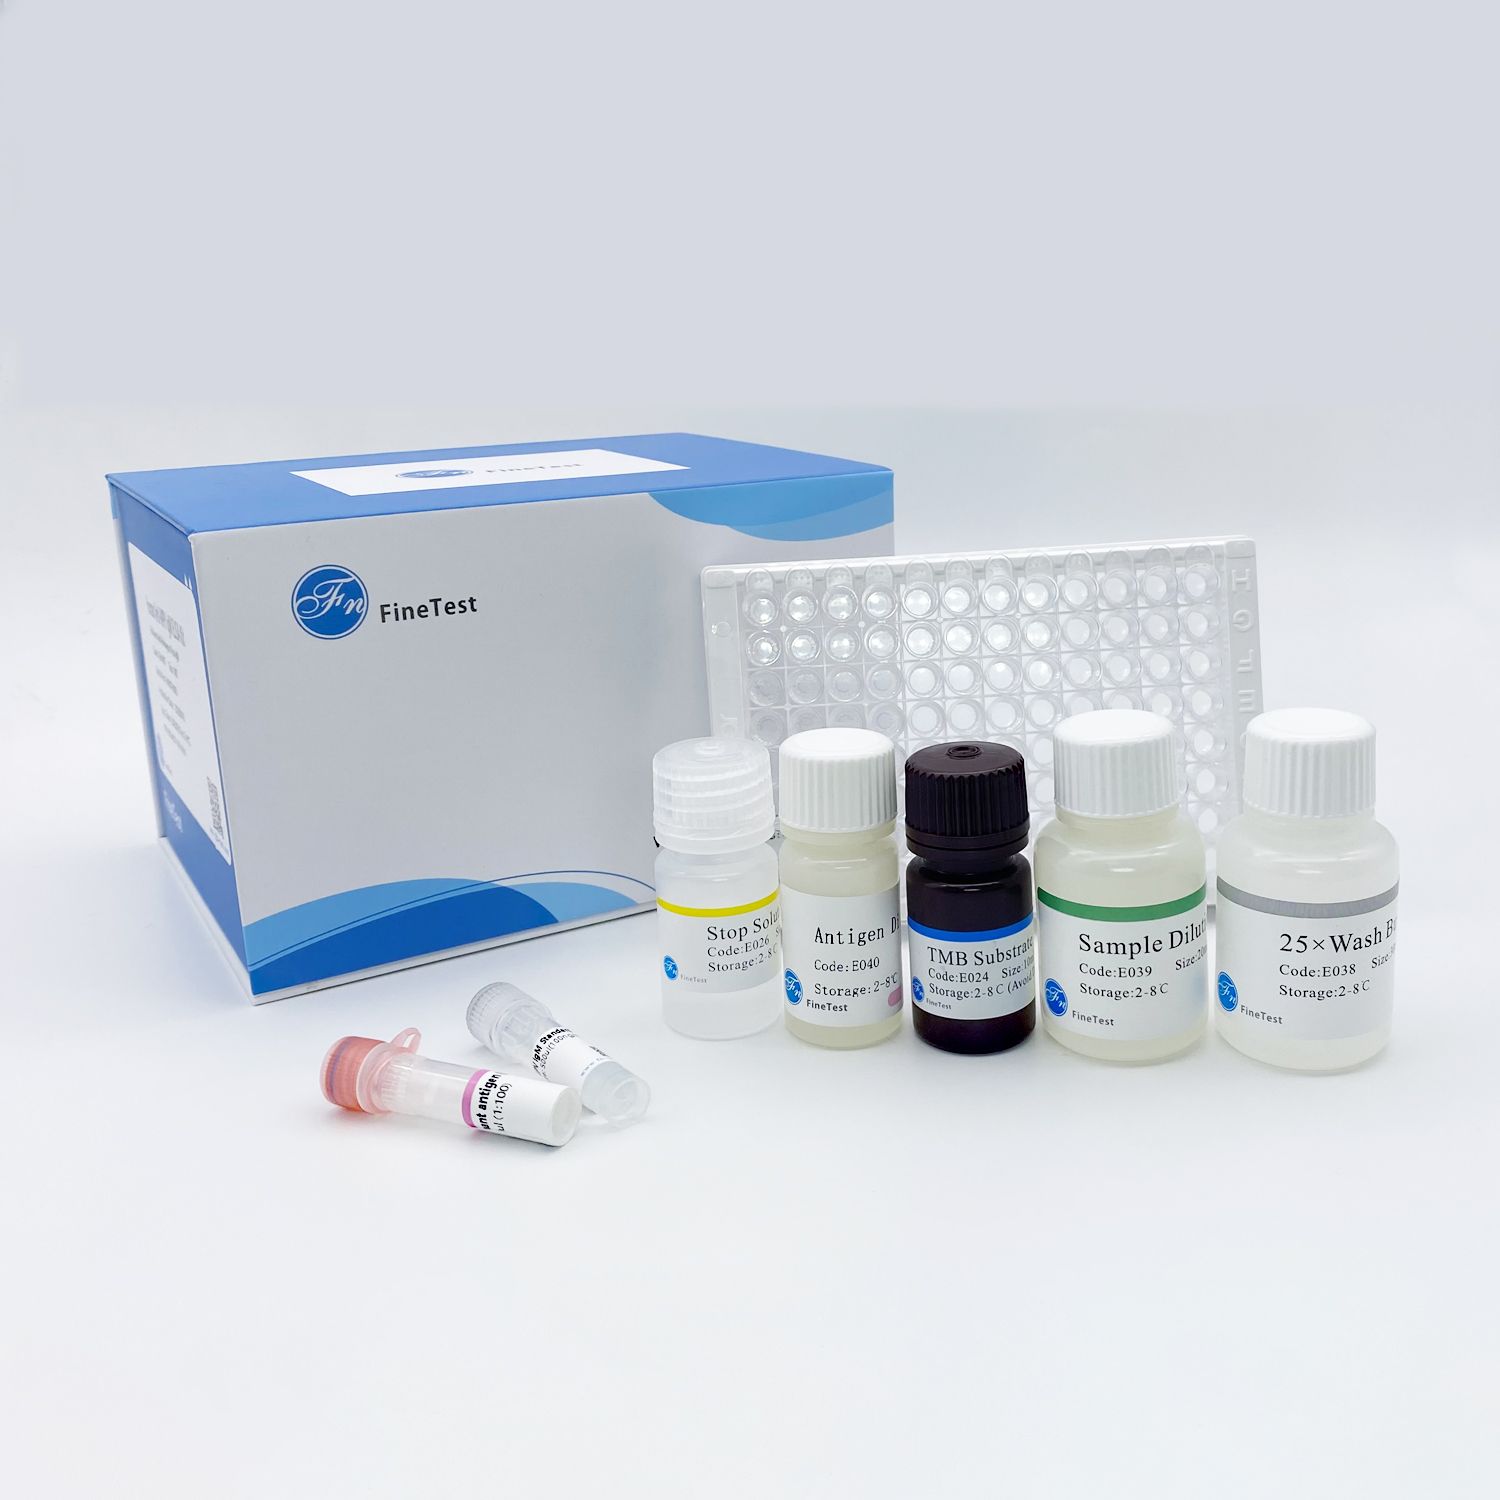 Testosterone test kit - Boditech Med Inc. - fertility / prolactin / serum